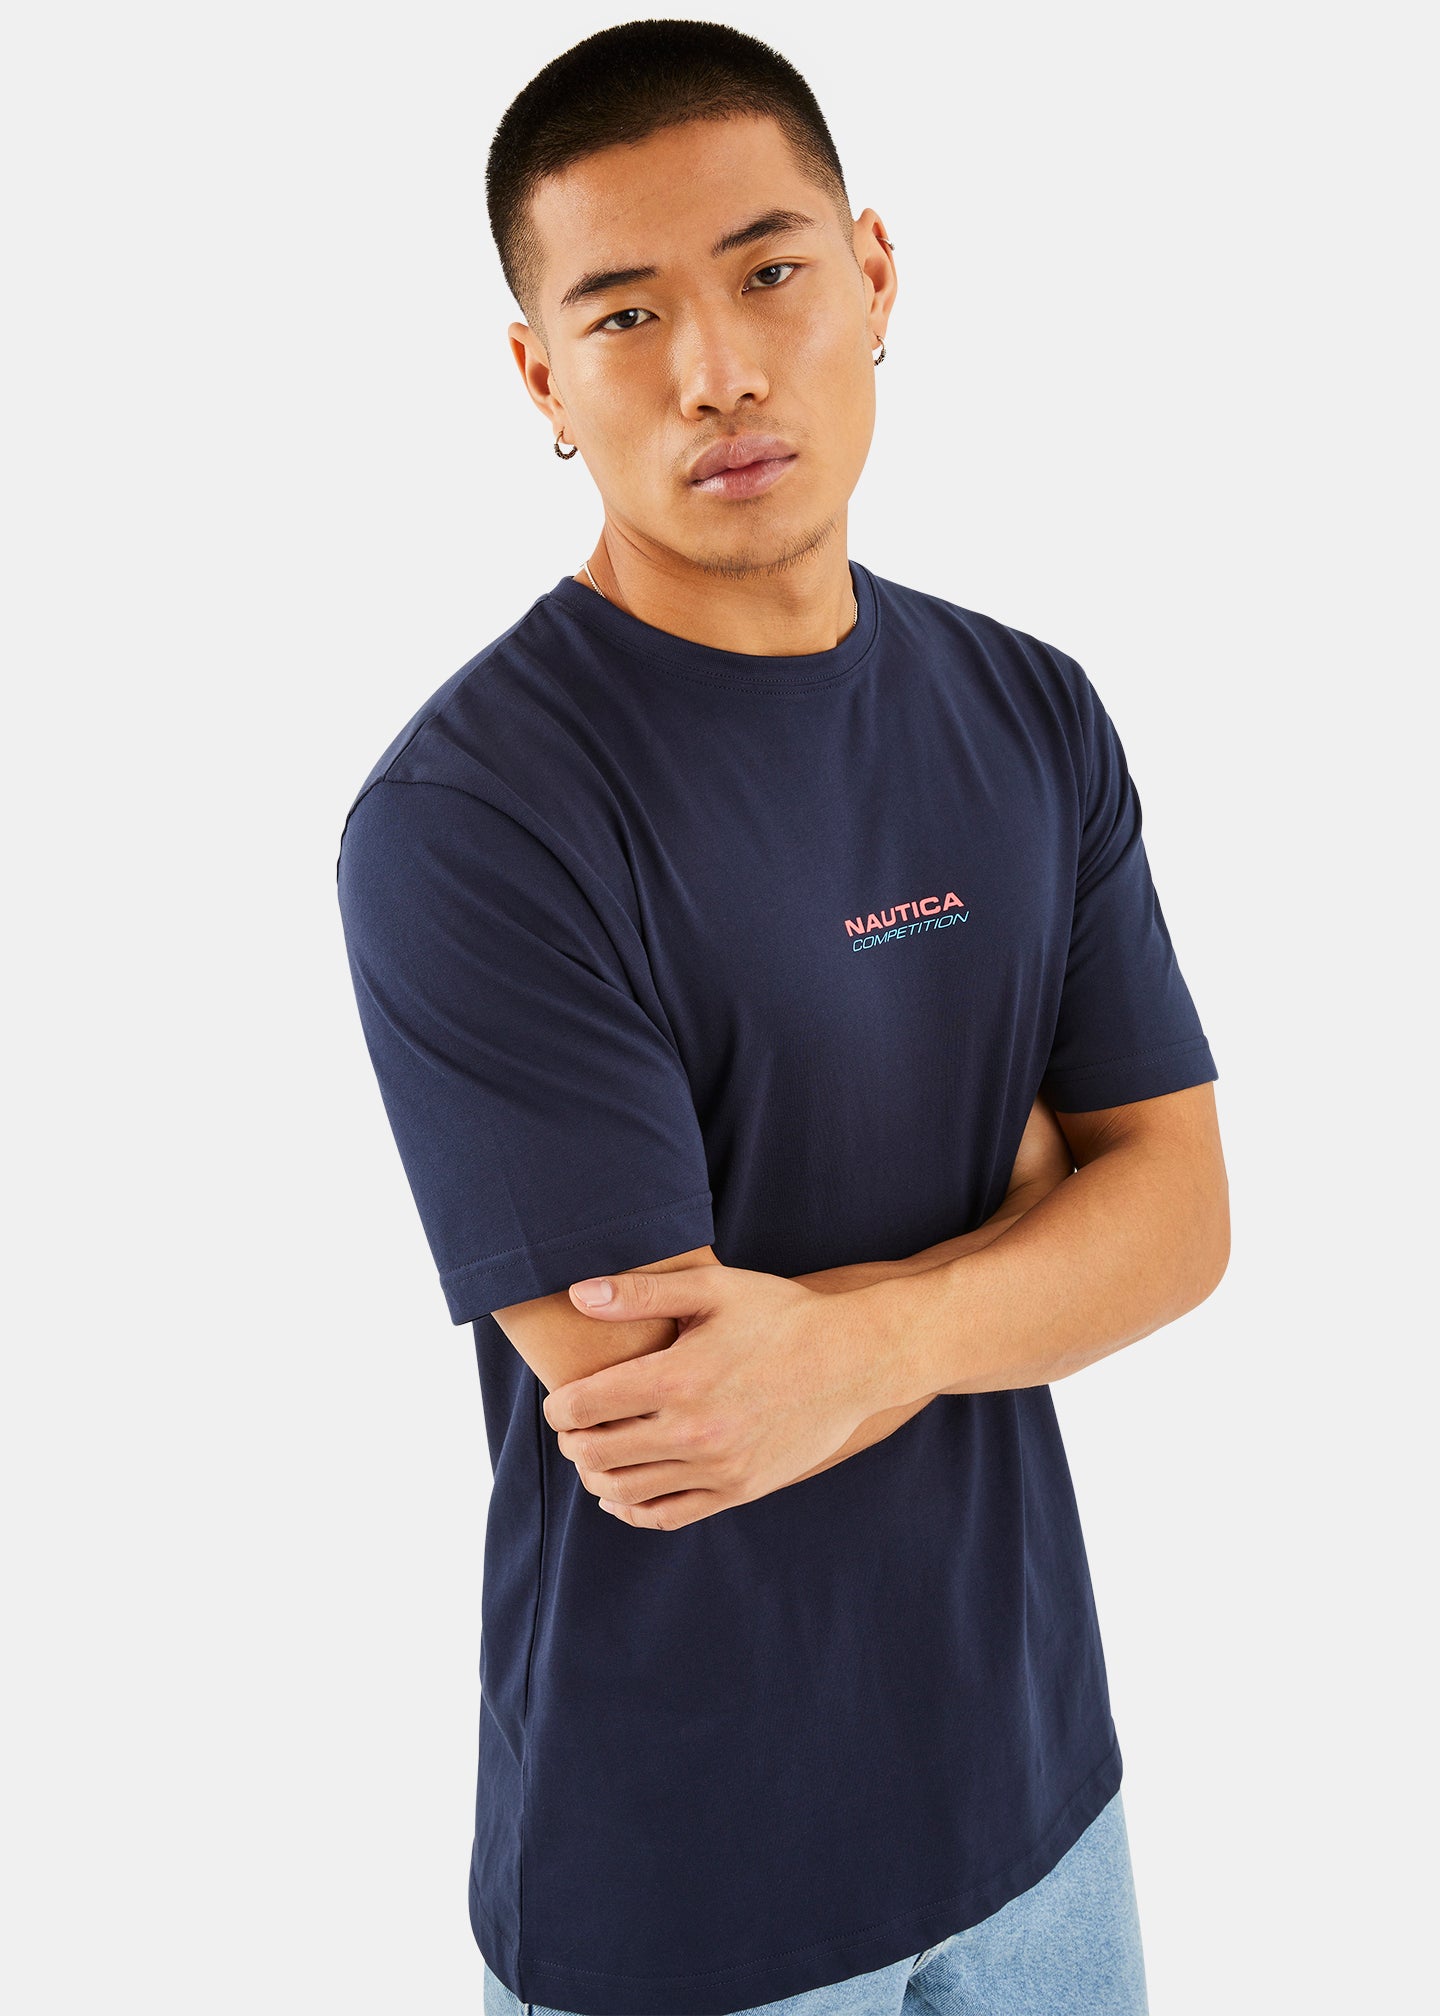 Nautica Competition Shane T-Shirt - Dark Navy - Front